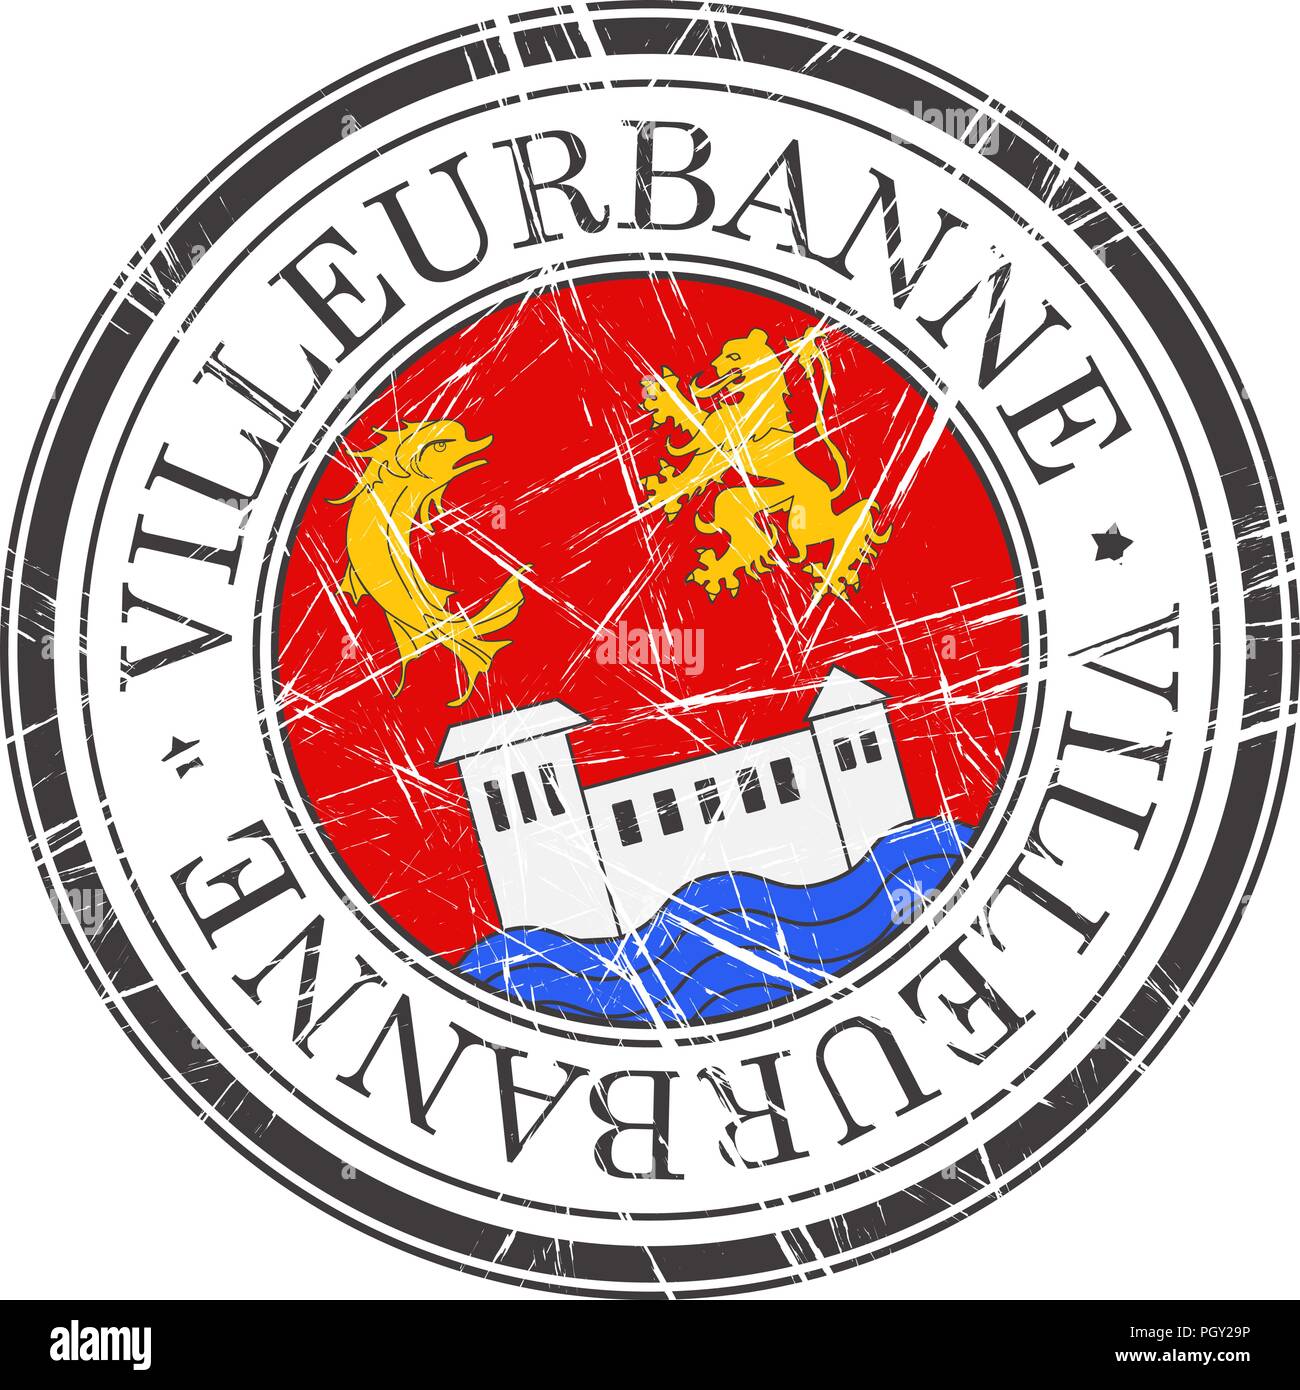 Villeurbanne city grunge rubber stamp on white Stock Vector